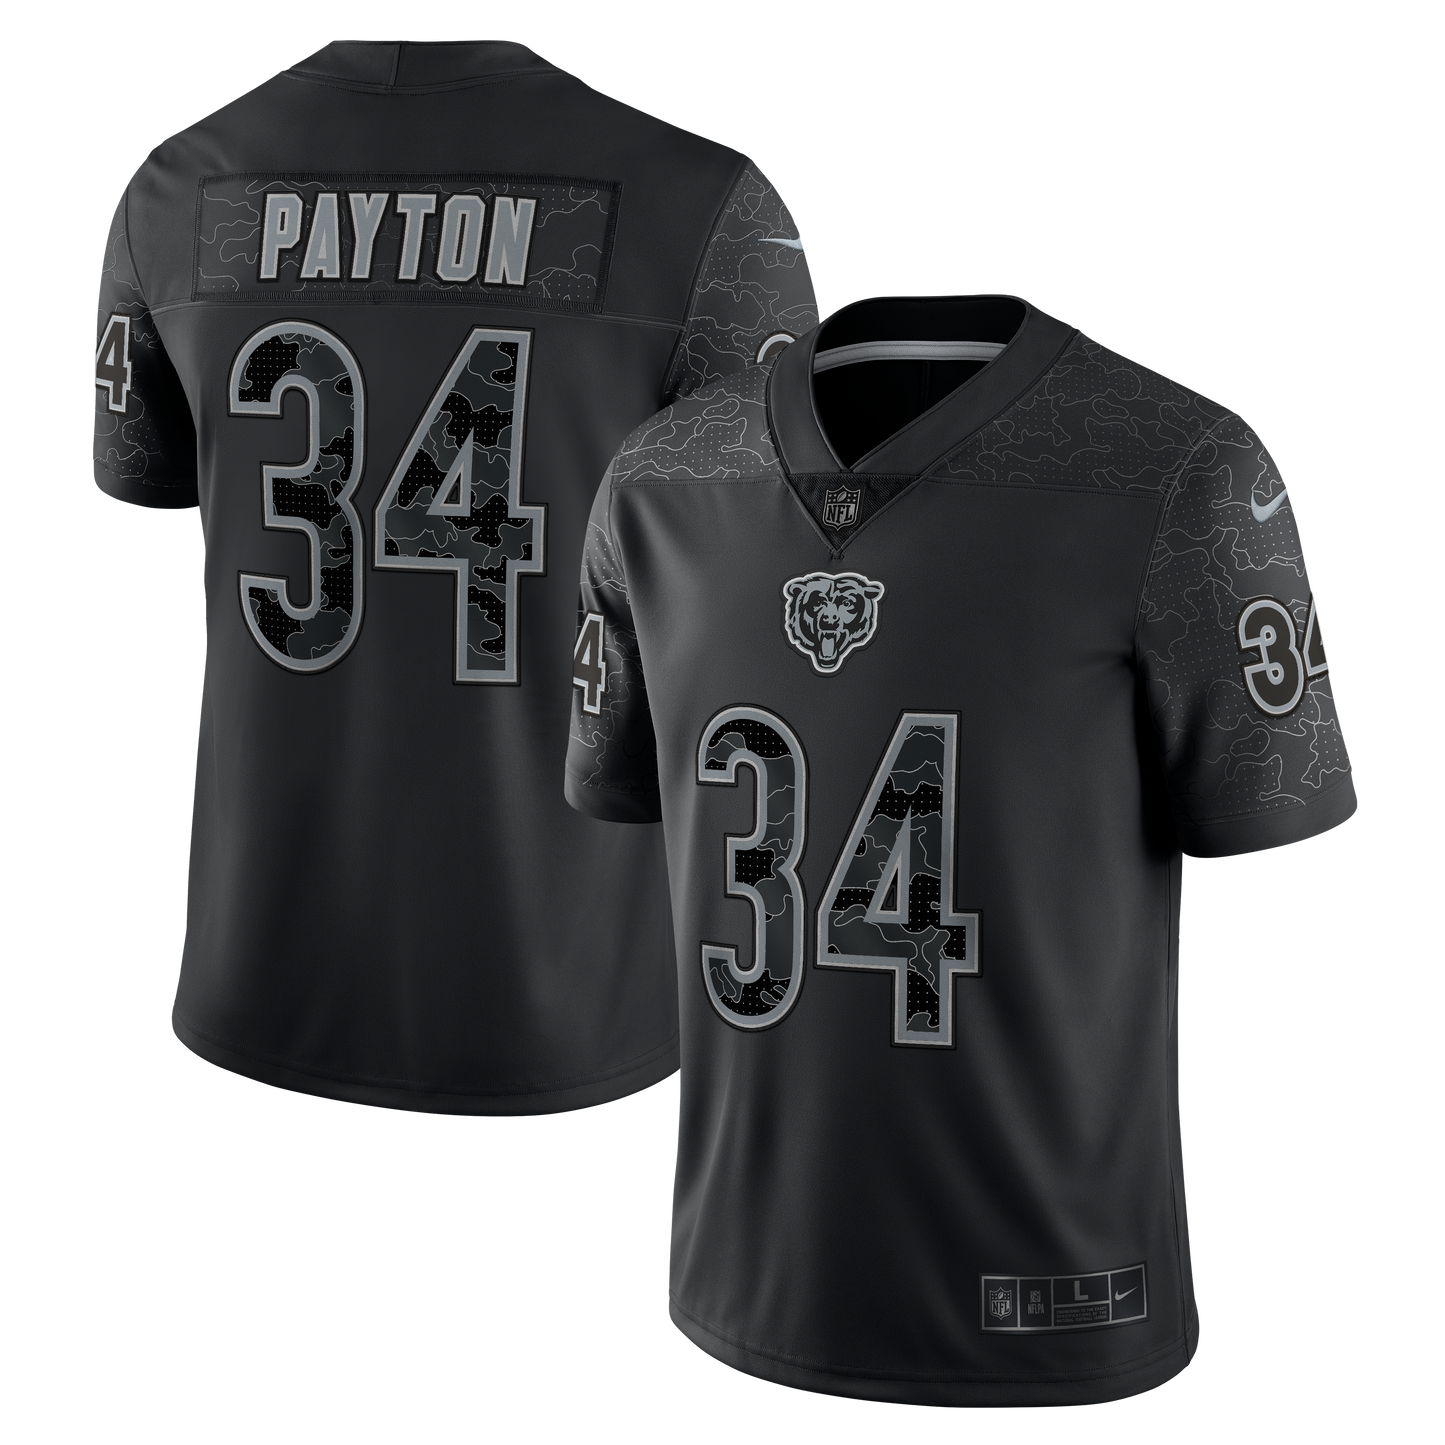 Walter Payton Chicago Bears Black/Grey Jersey